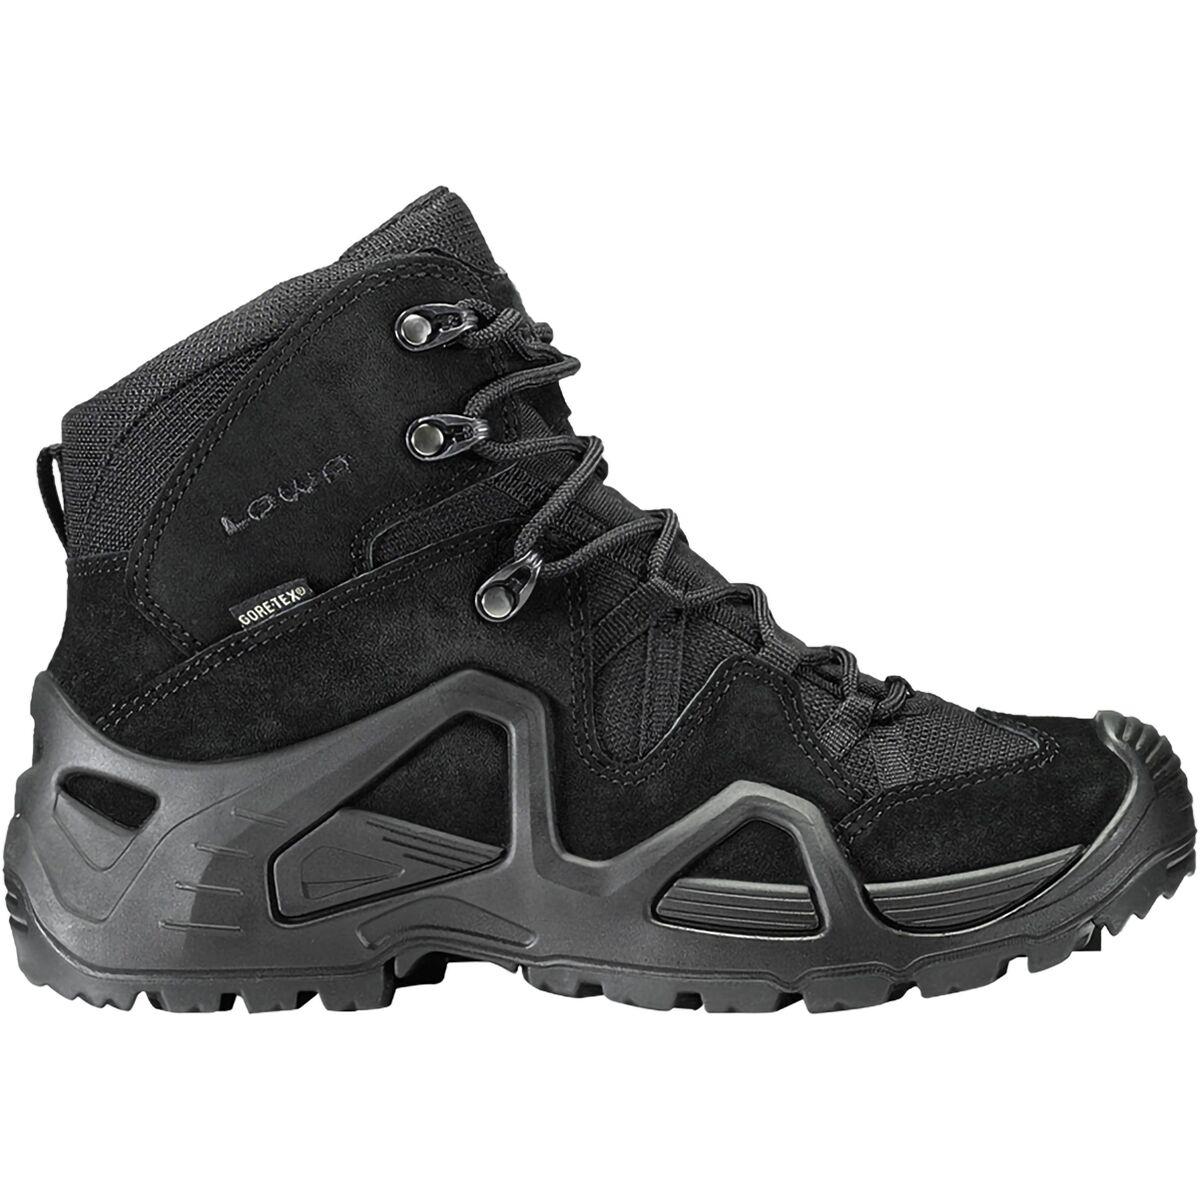 Lowa Suede Zephyr Gtx Mid Tf Hiking Boot in Black/Black (Black) - Lyst